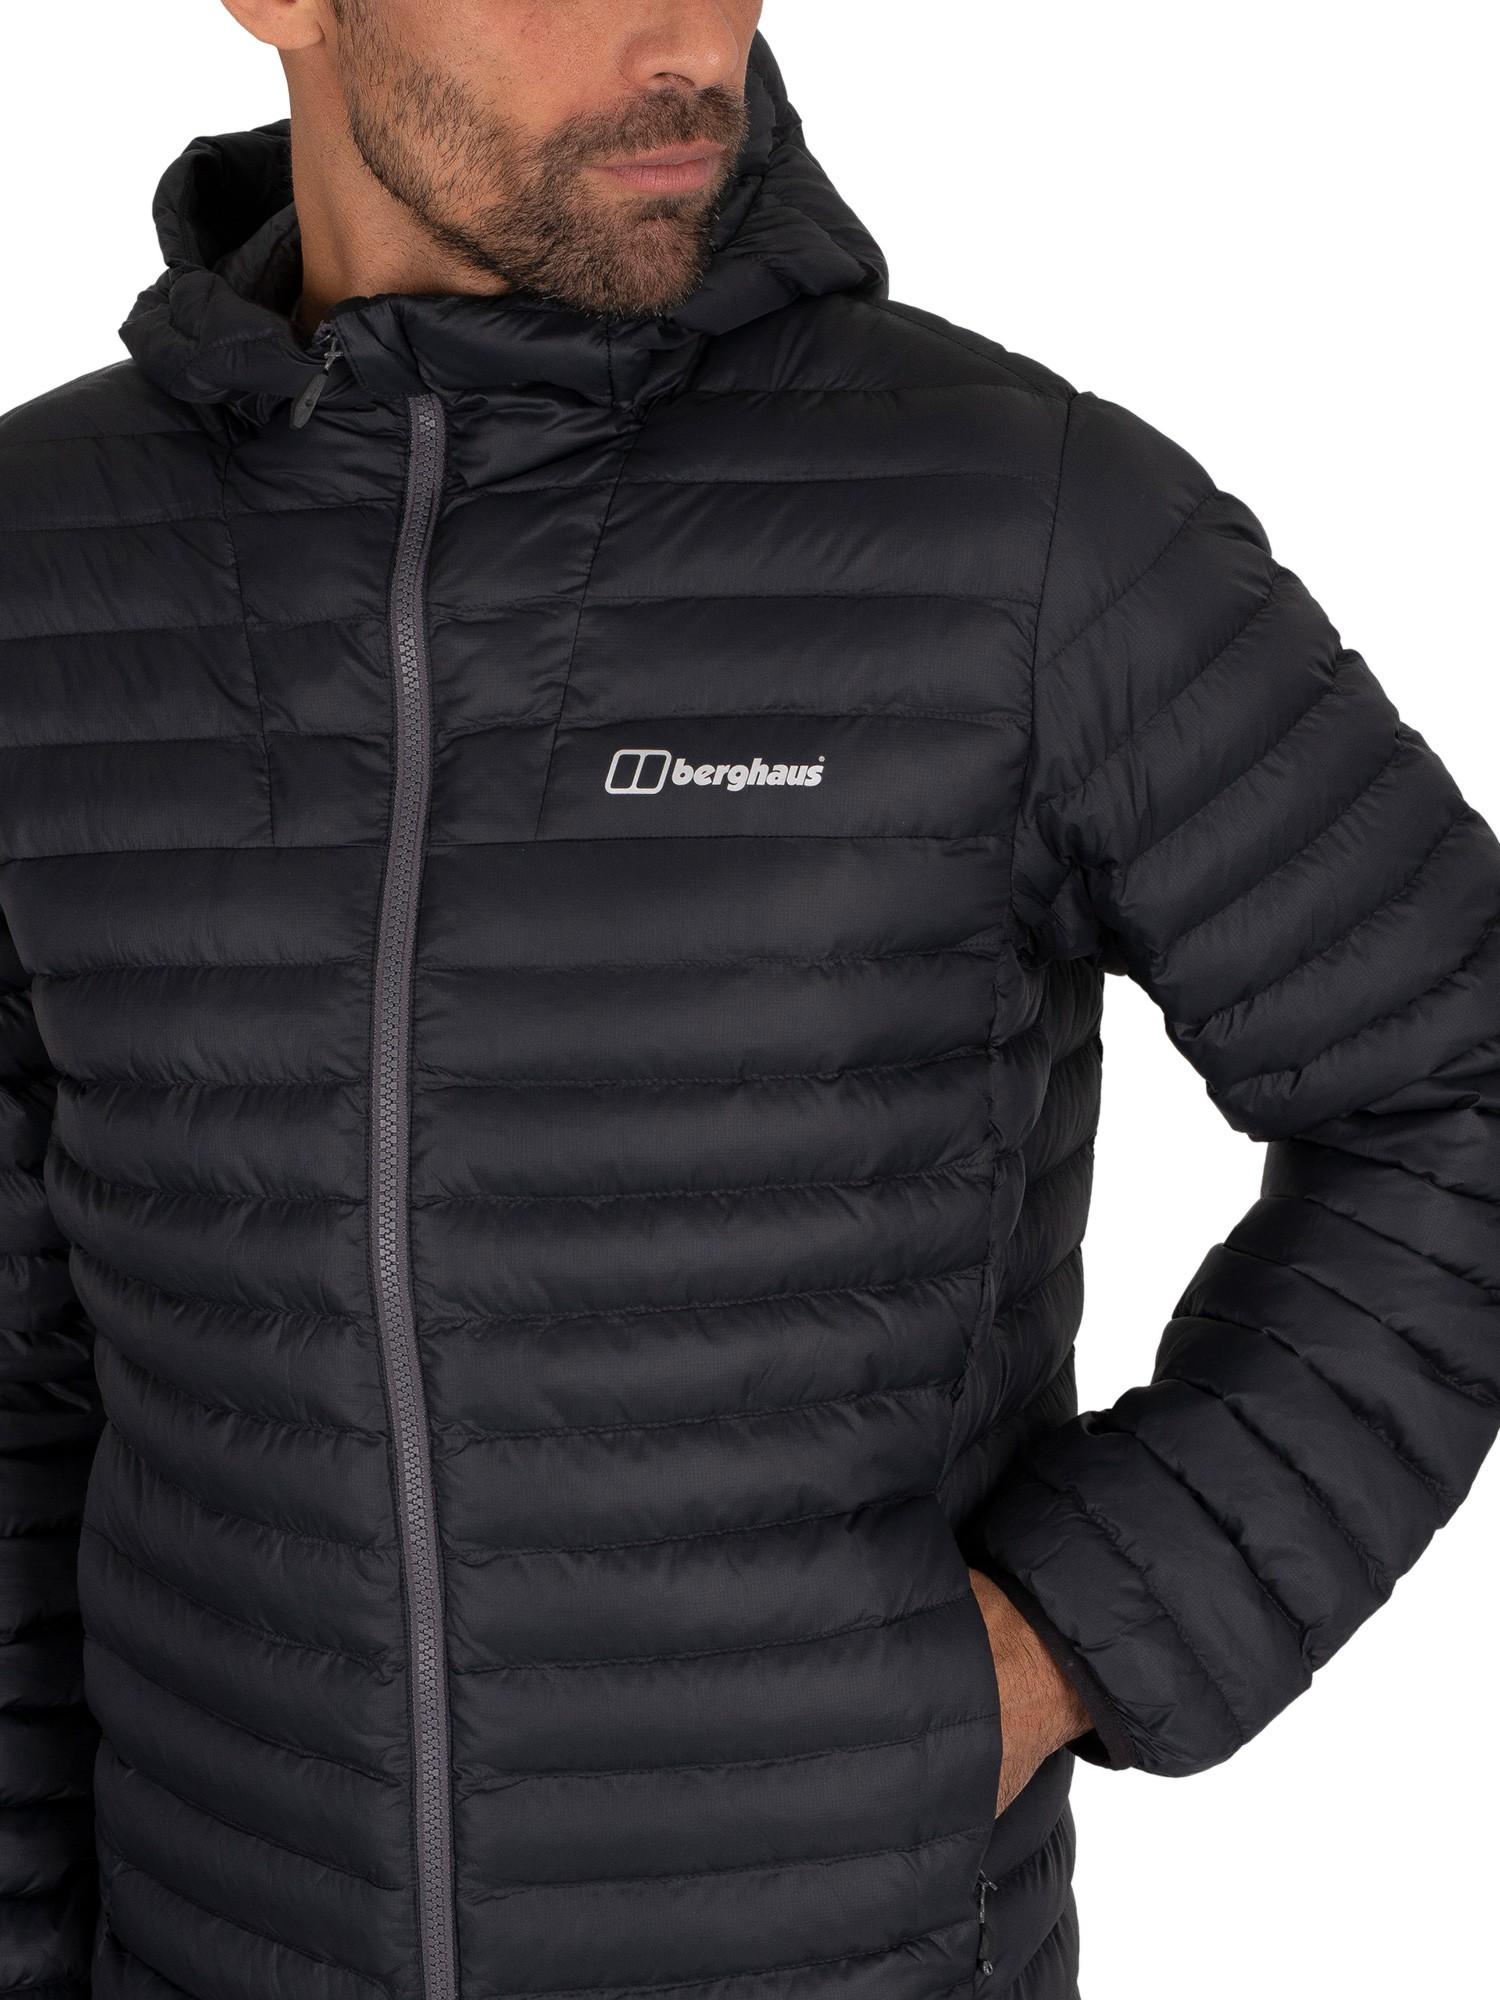 Berghaus Vaskye Puffer Jacket in Black 